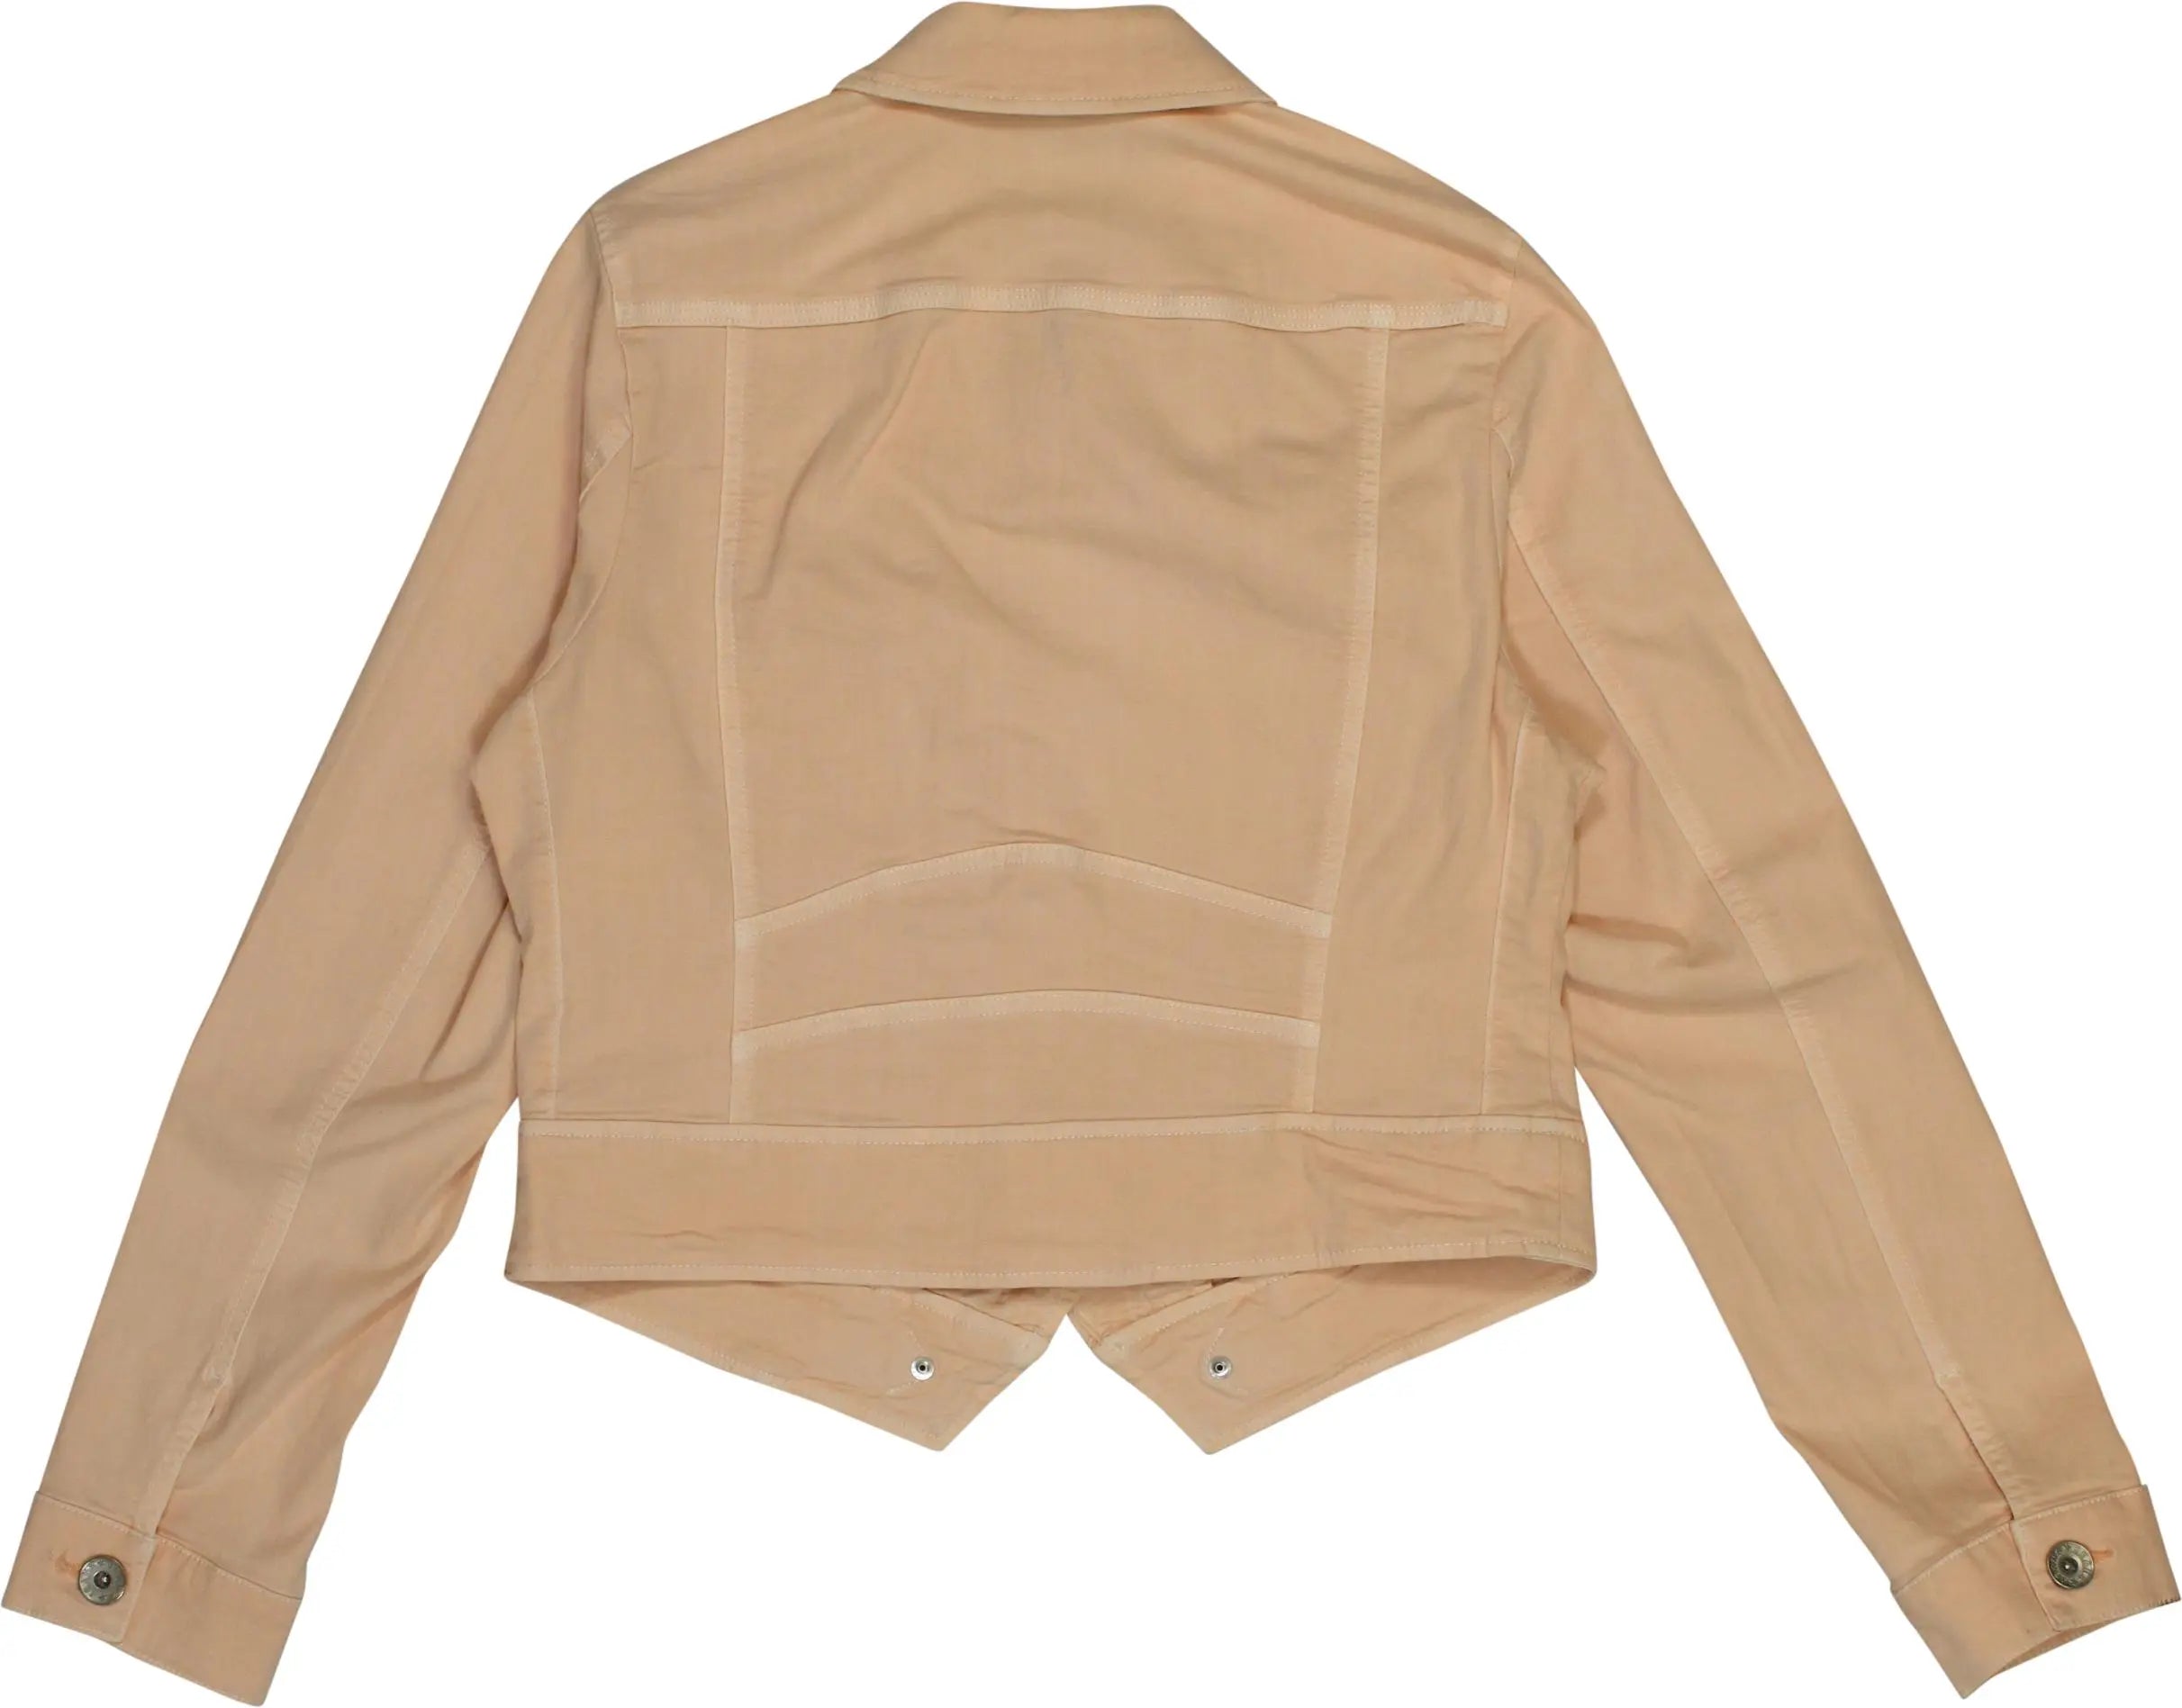 Pescara - Denim Jacket- ThriftTale.com - Vintage and second handclothing